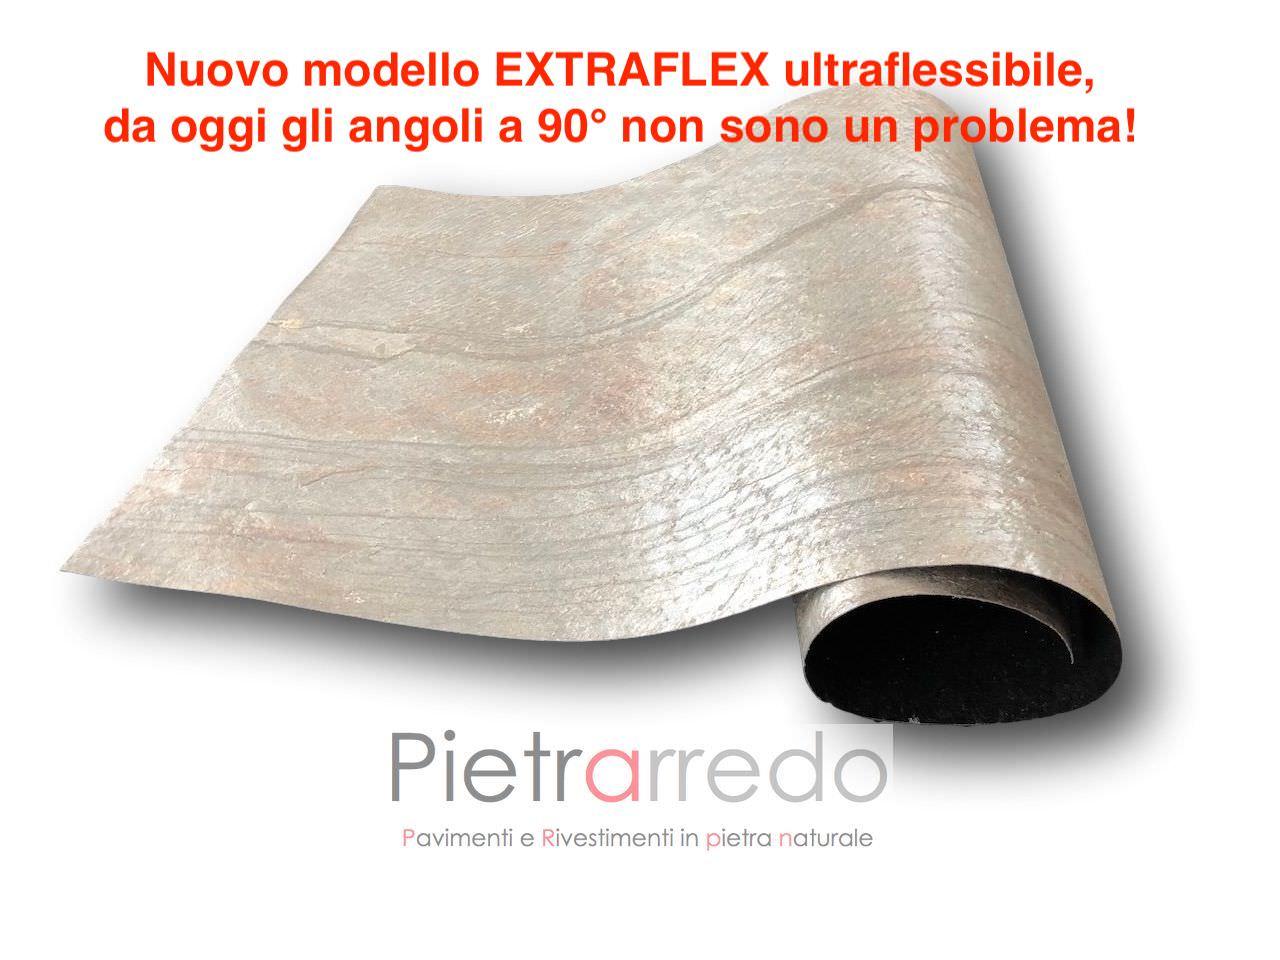 foglio sheet stne veneer flex stone gold green price on sale offerta pietrarredo milano